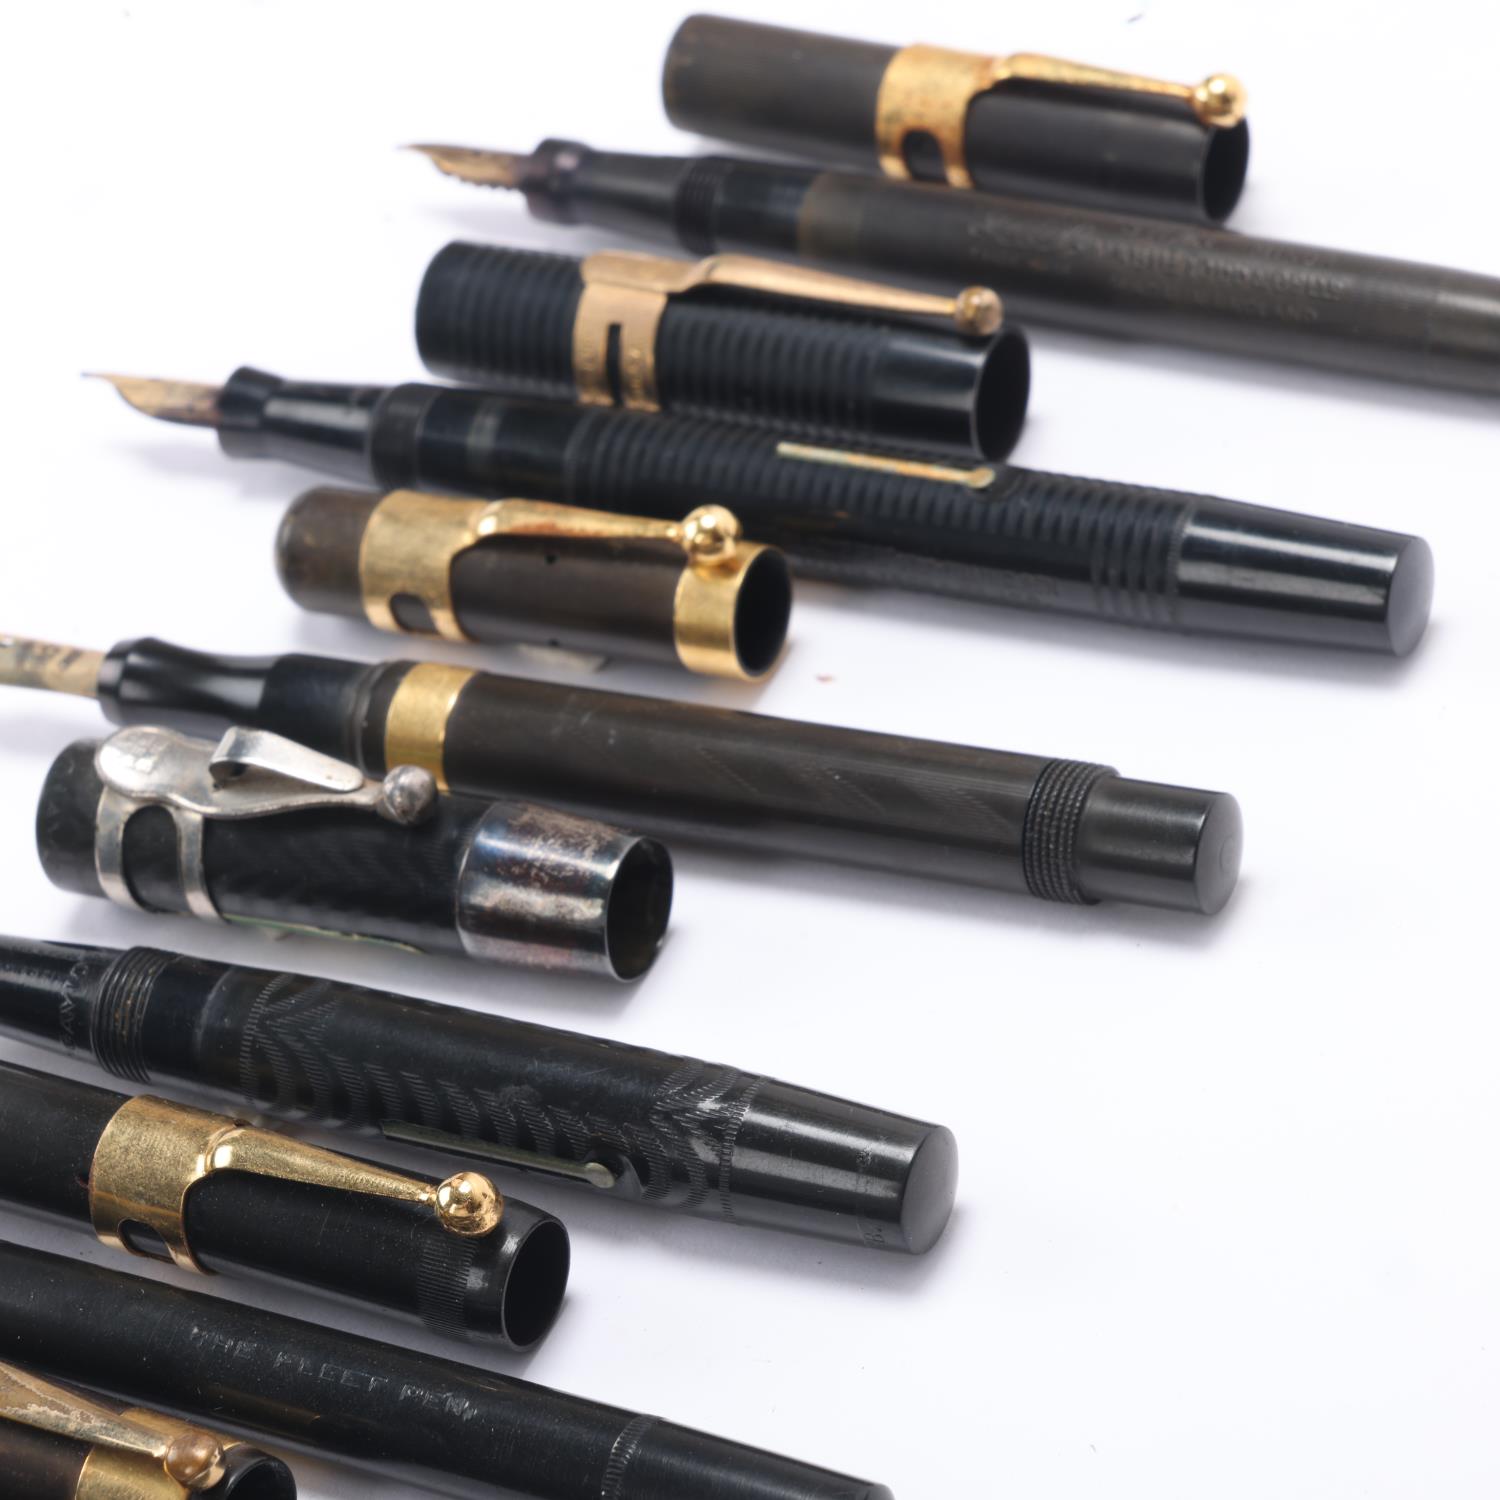 6 early 20th century fountain pens, Mabie, Todd & Co / Swan - Gaviota, Blackbird, The Fleet, Minor - Image 4 of 4